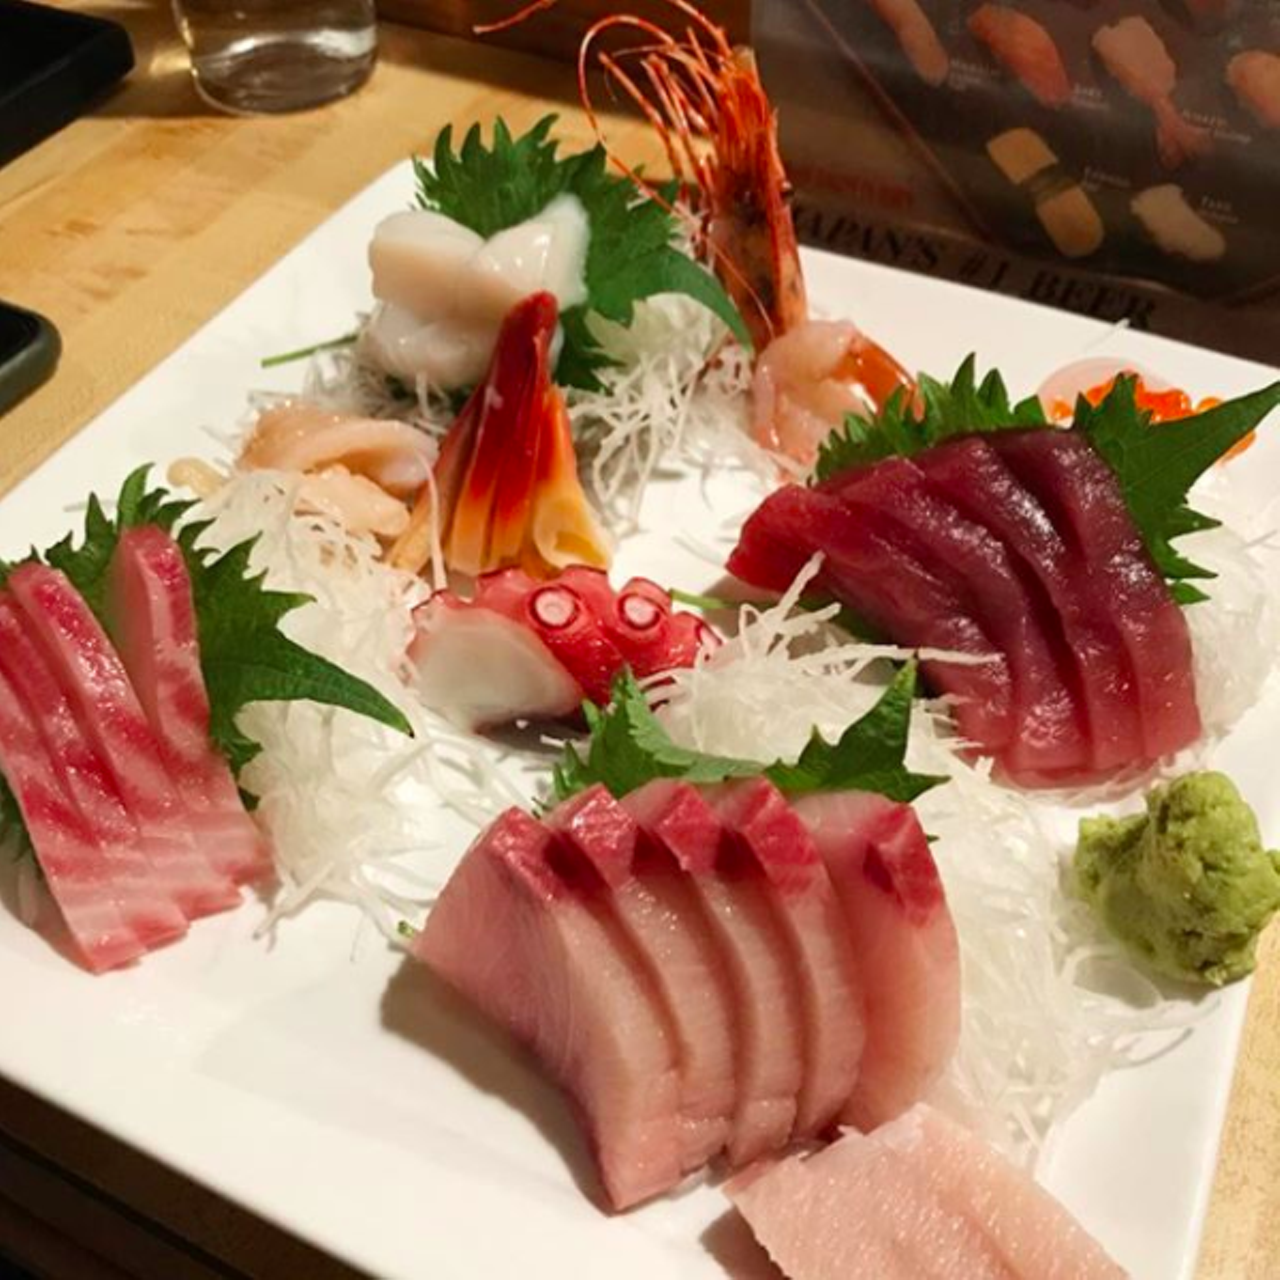 Niki's Tokyo Inn
819 W. Hildebrand Ave., (210) 736-5471, facebook.com/nikis.tokyo.inn
Serving up the freshest sashimi in the coziest little spot, Niki's is perfect for date night or a solo dining trip.  
Photo via Instagram / jetsetter2020